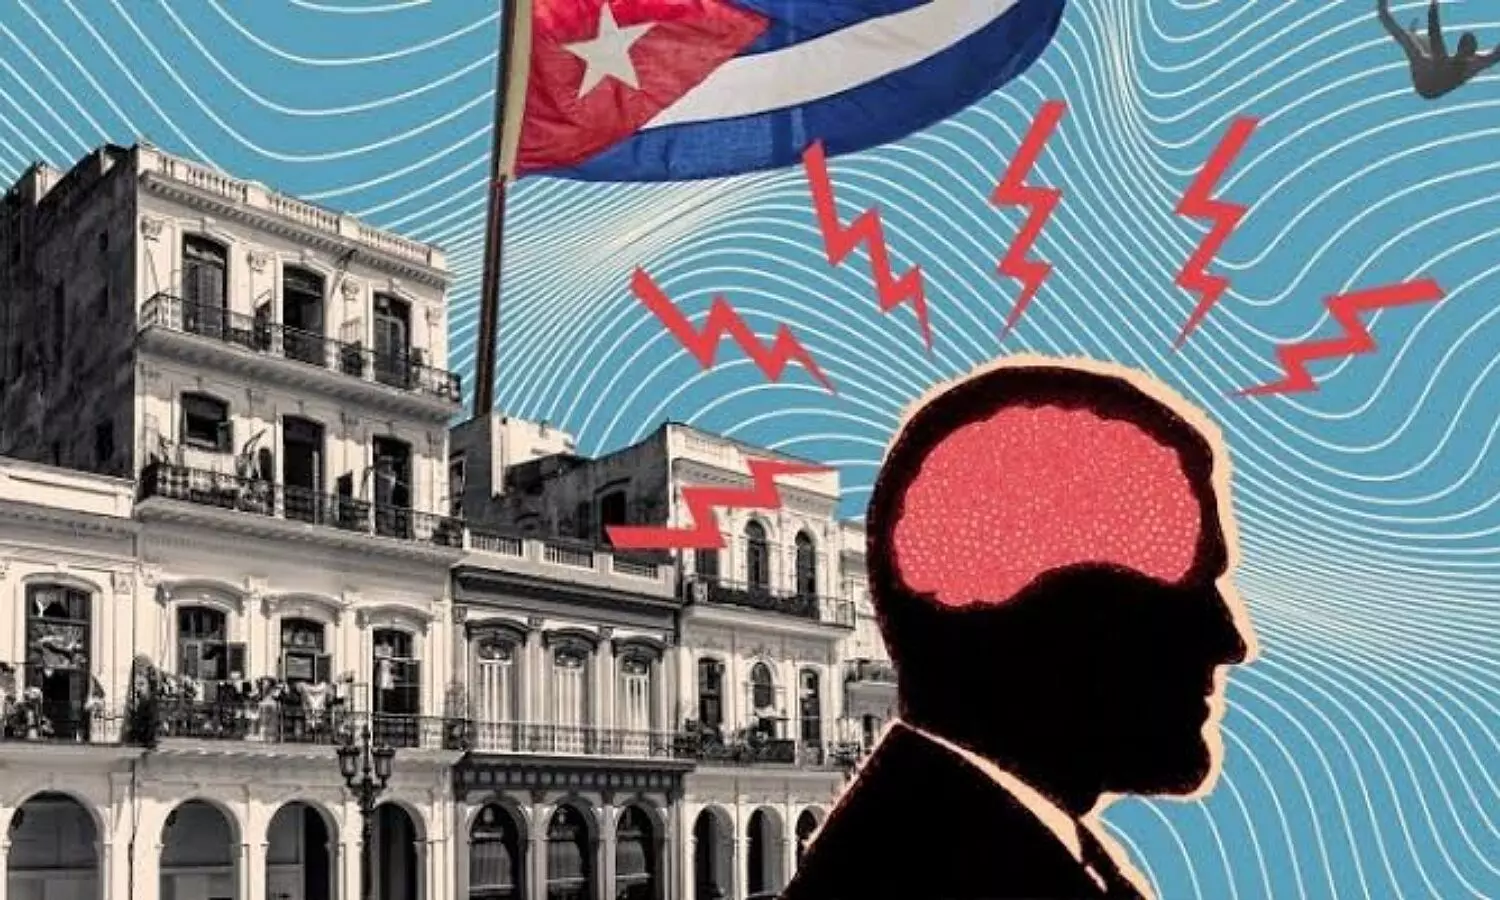 Havana Syndrome attack